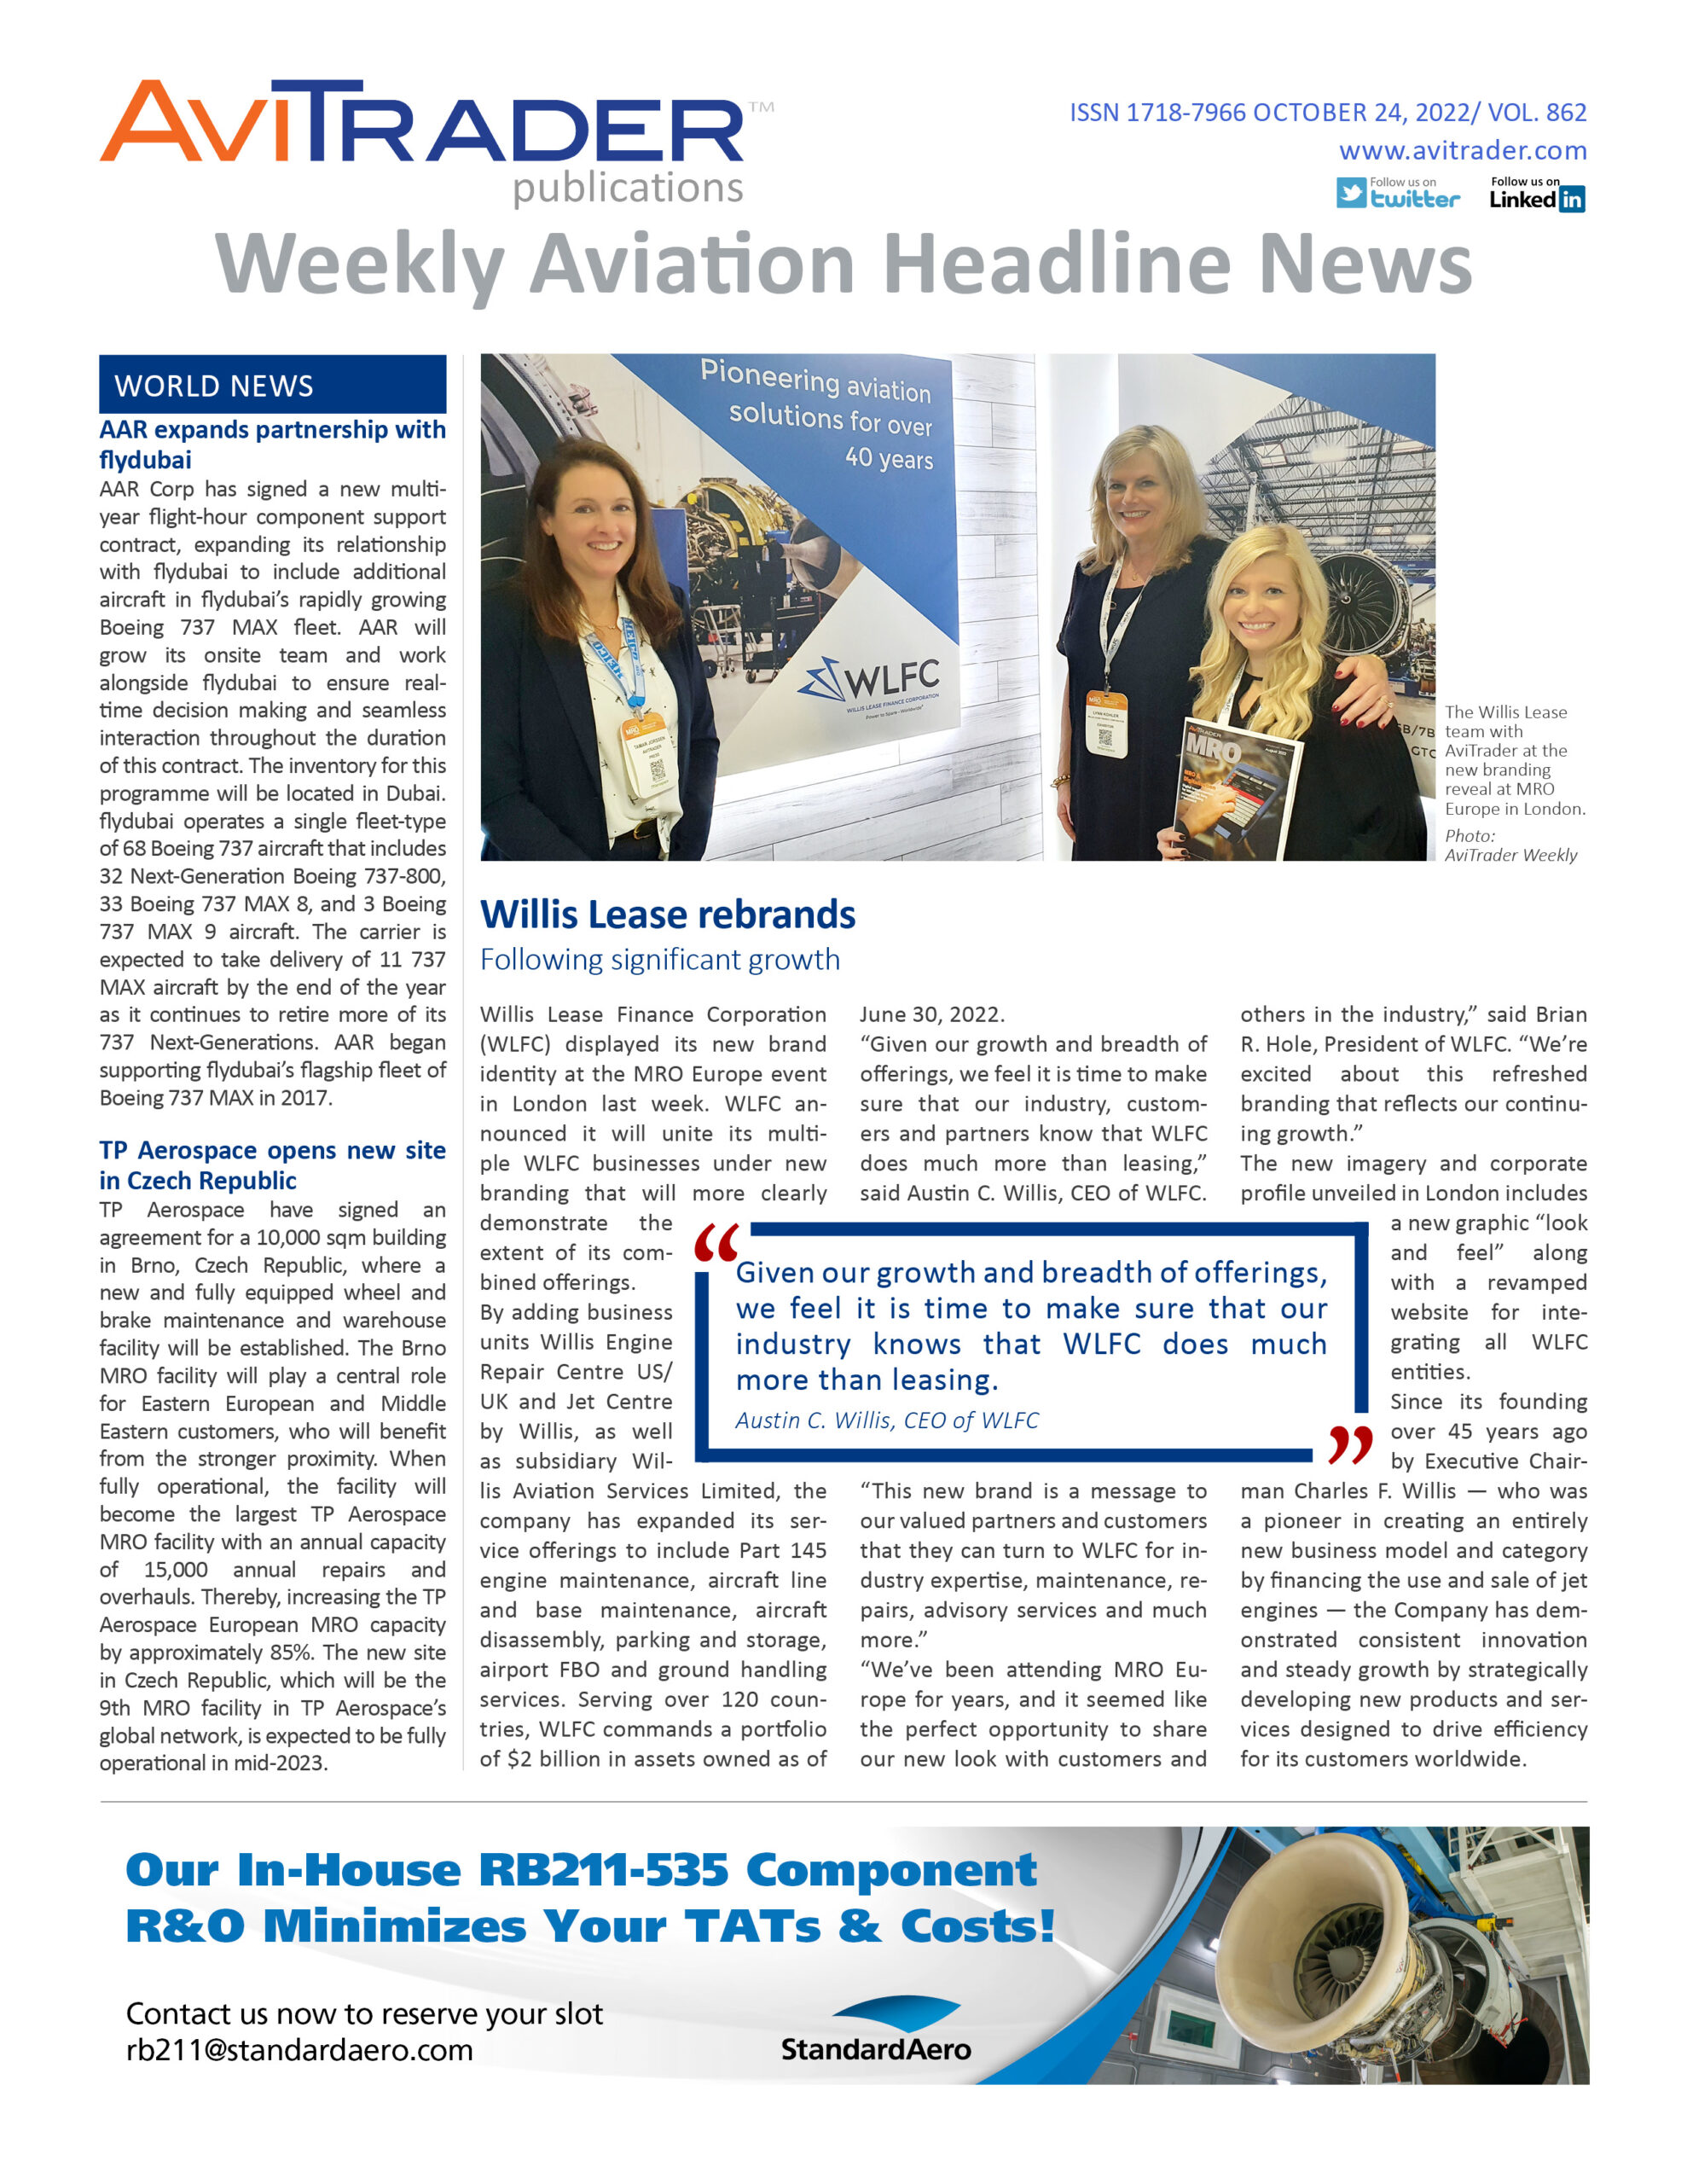 AviTrader_Weekly_Headline_News_Cover_2022-10-24